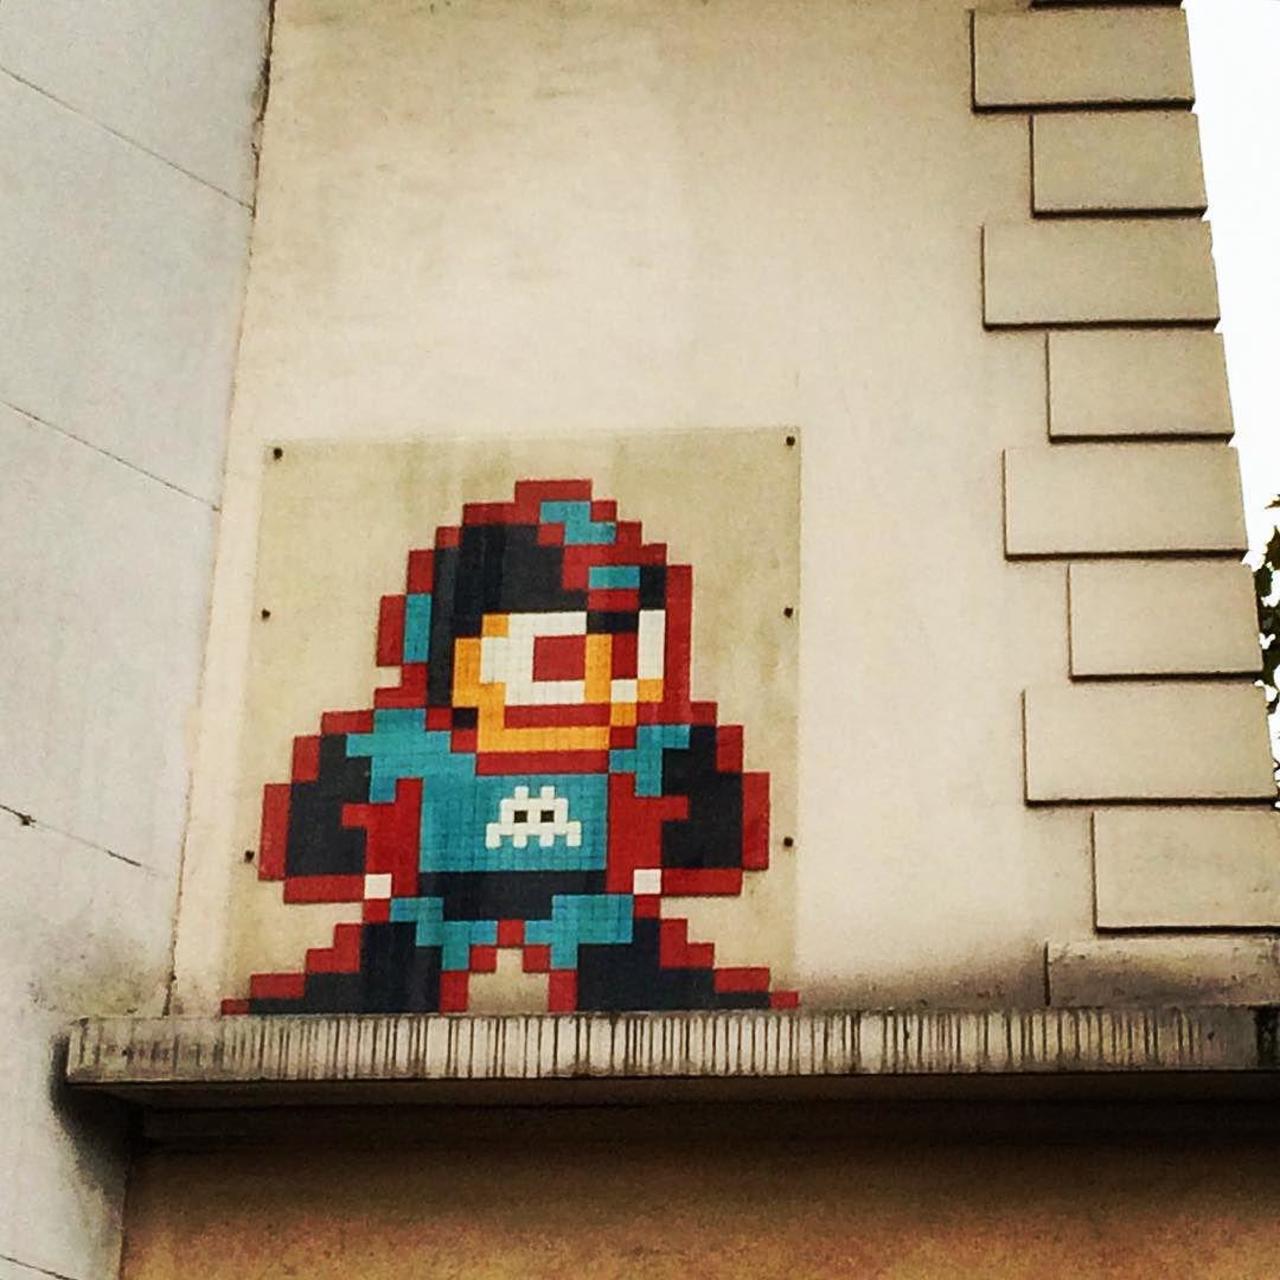 #Paris #graffiti photo by @julosteart http://ift.tt/1Mx0piD #StreetArt http://t.co/PKUMmrF8l3